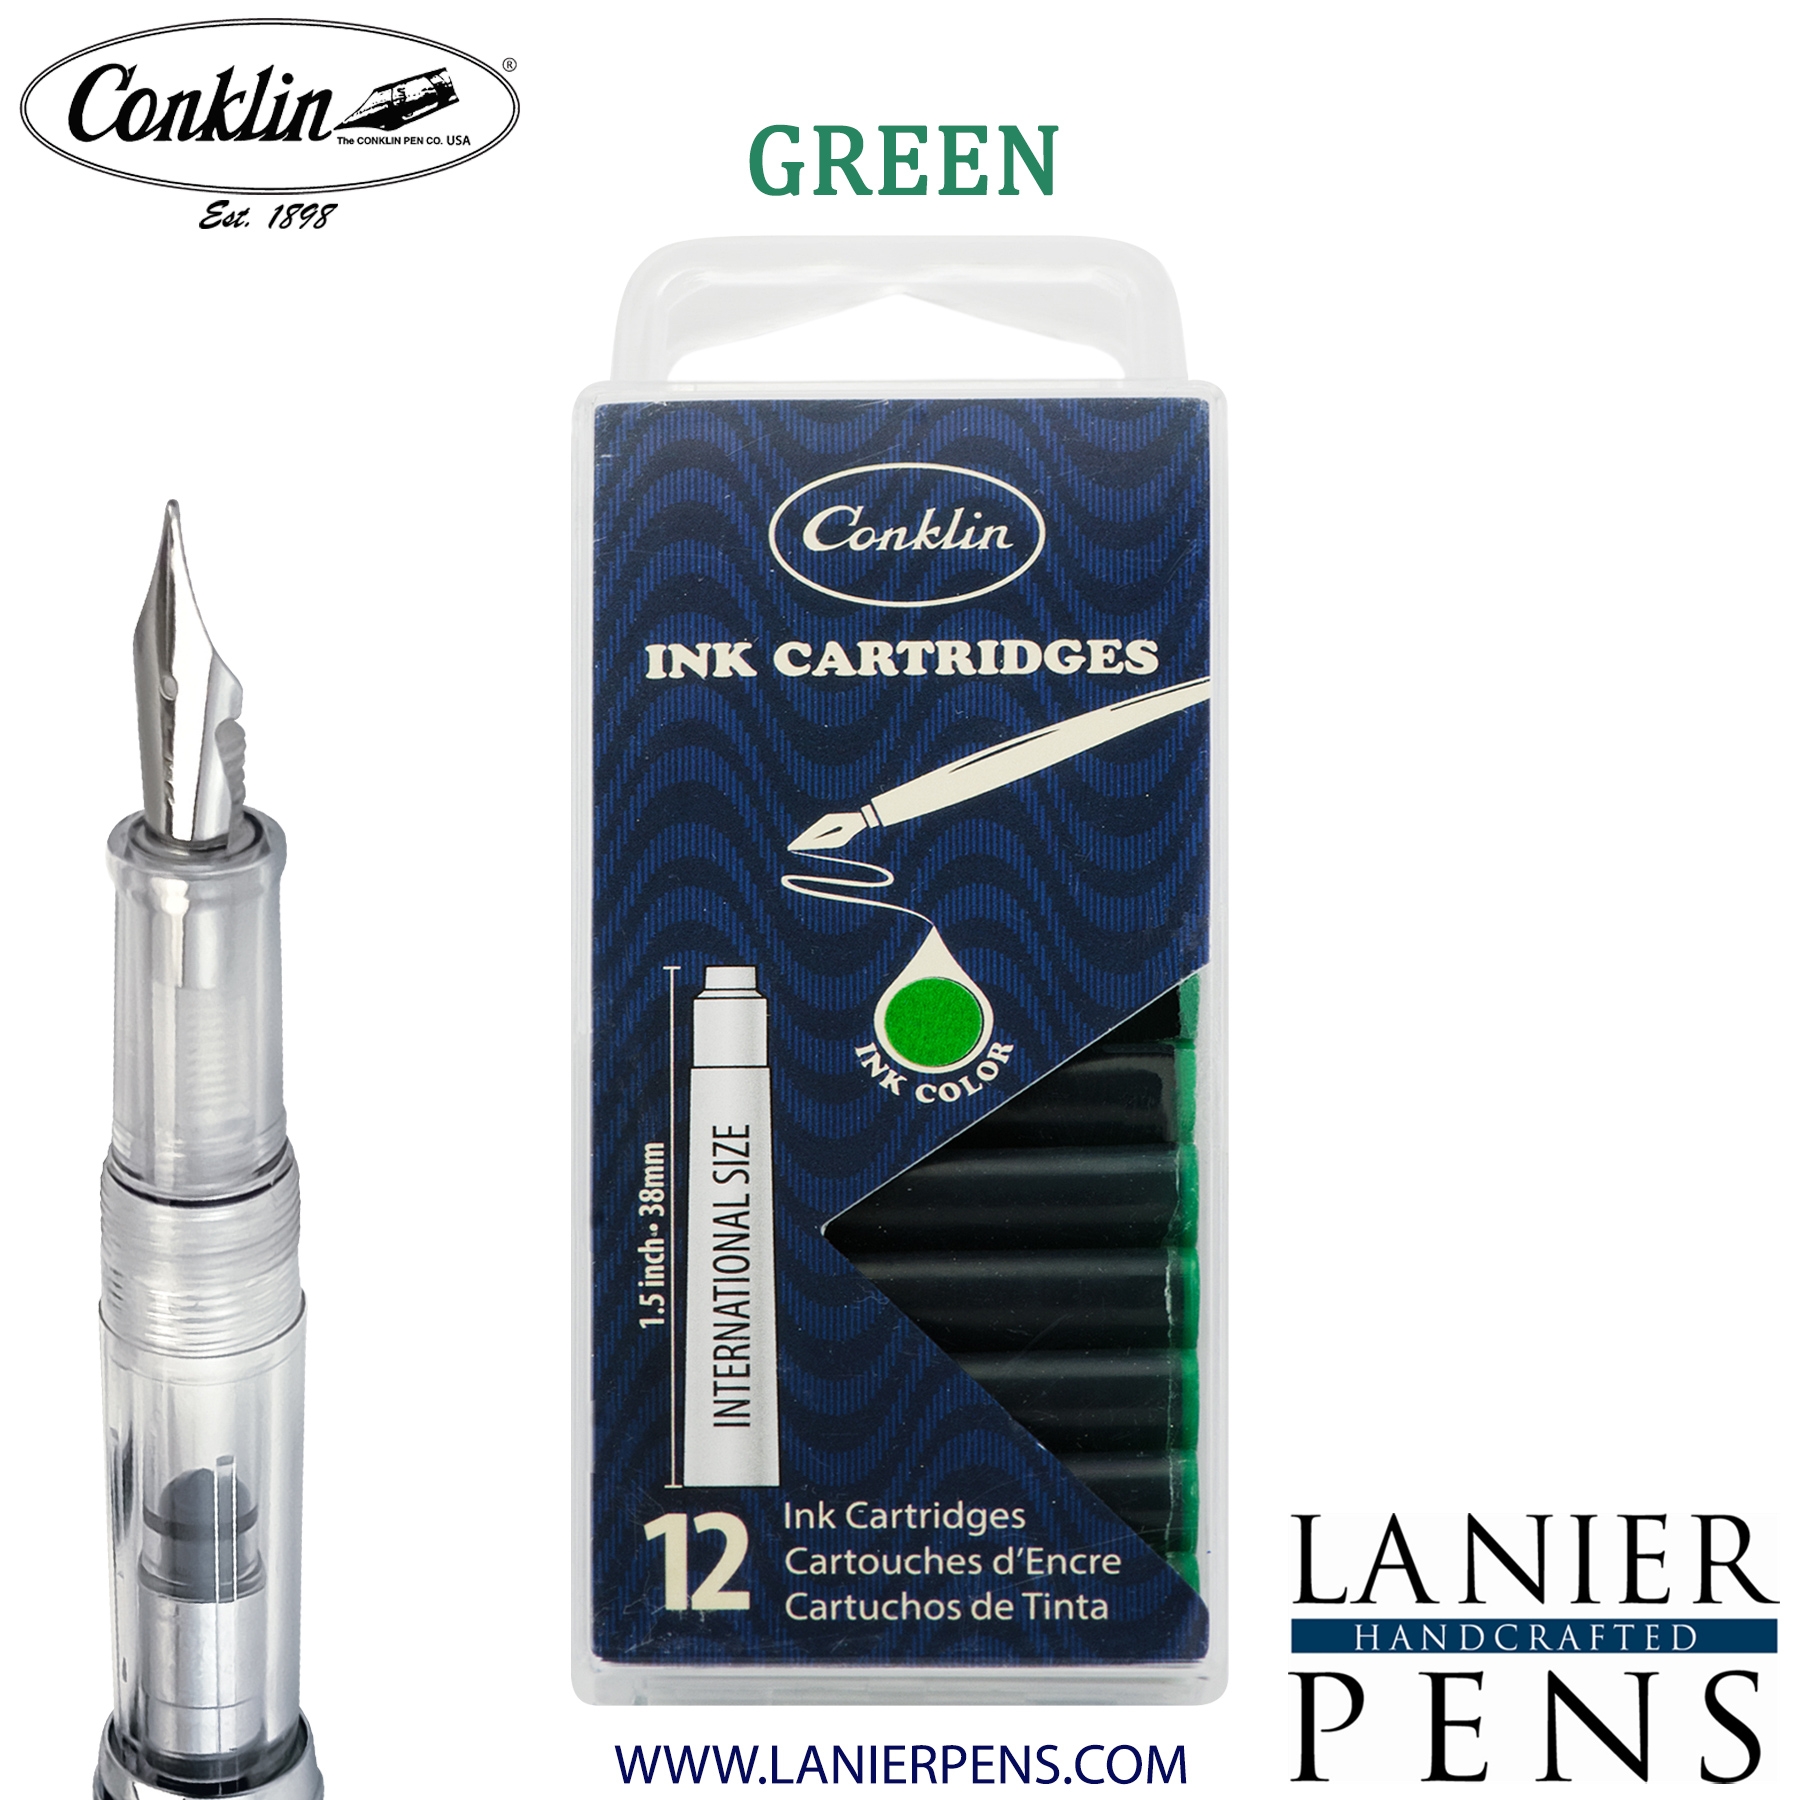 12 Pack Conklin Ink Cartridges - Green By Lanier Pens